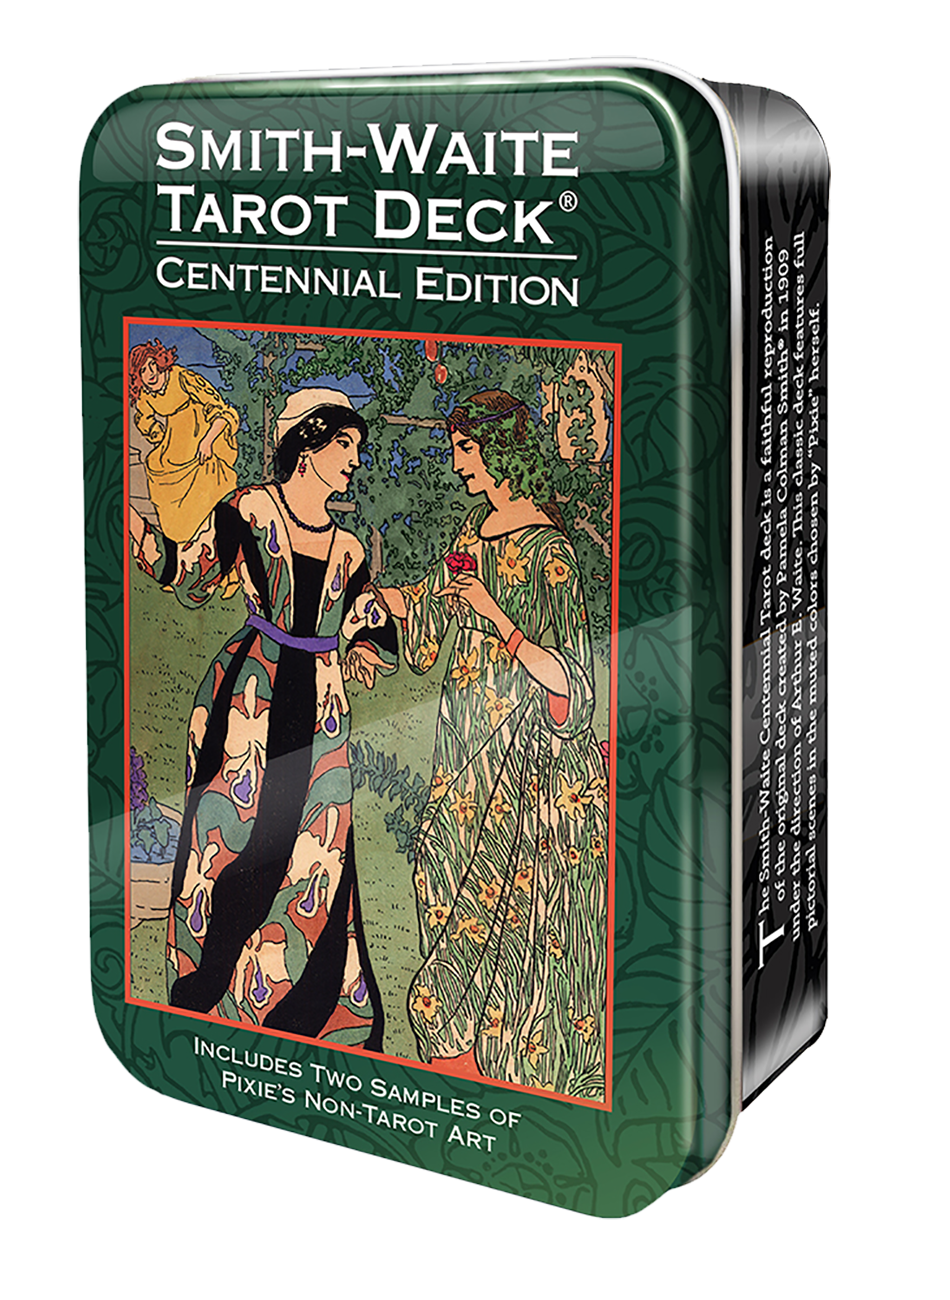 Smith-Waite Centennial Tarot Deck in a Tin (Travel-Sized Cards)